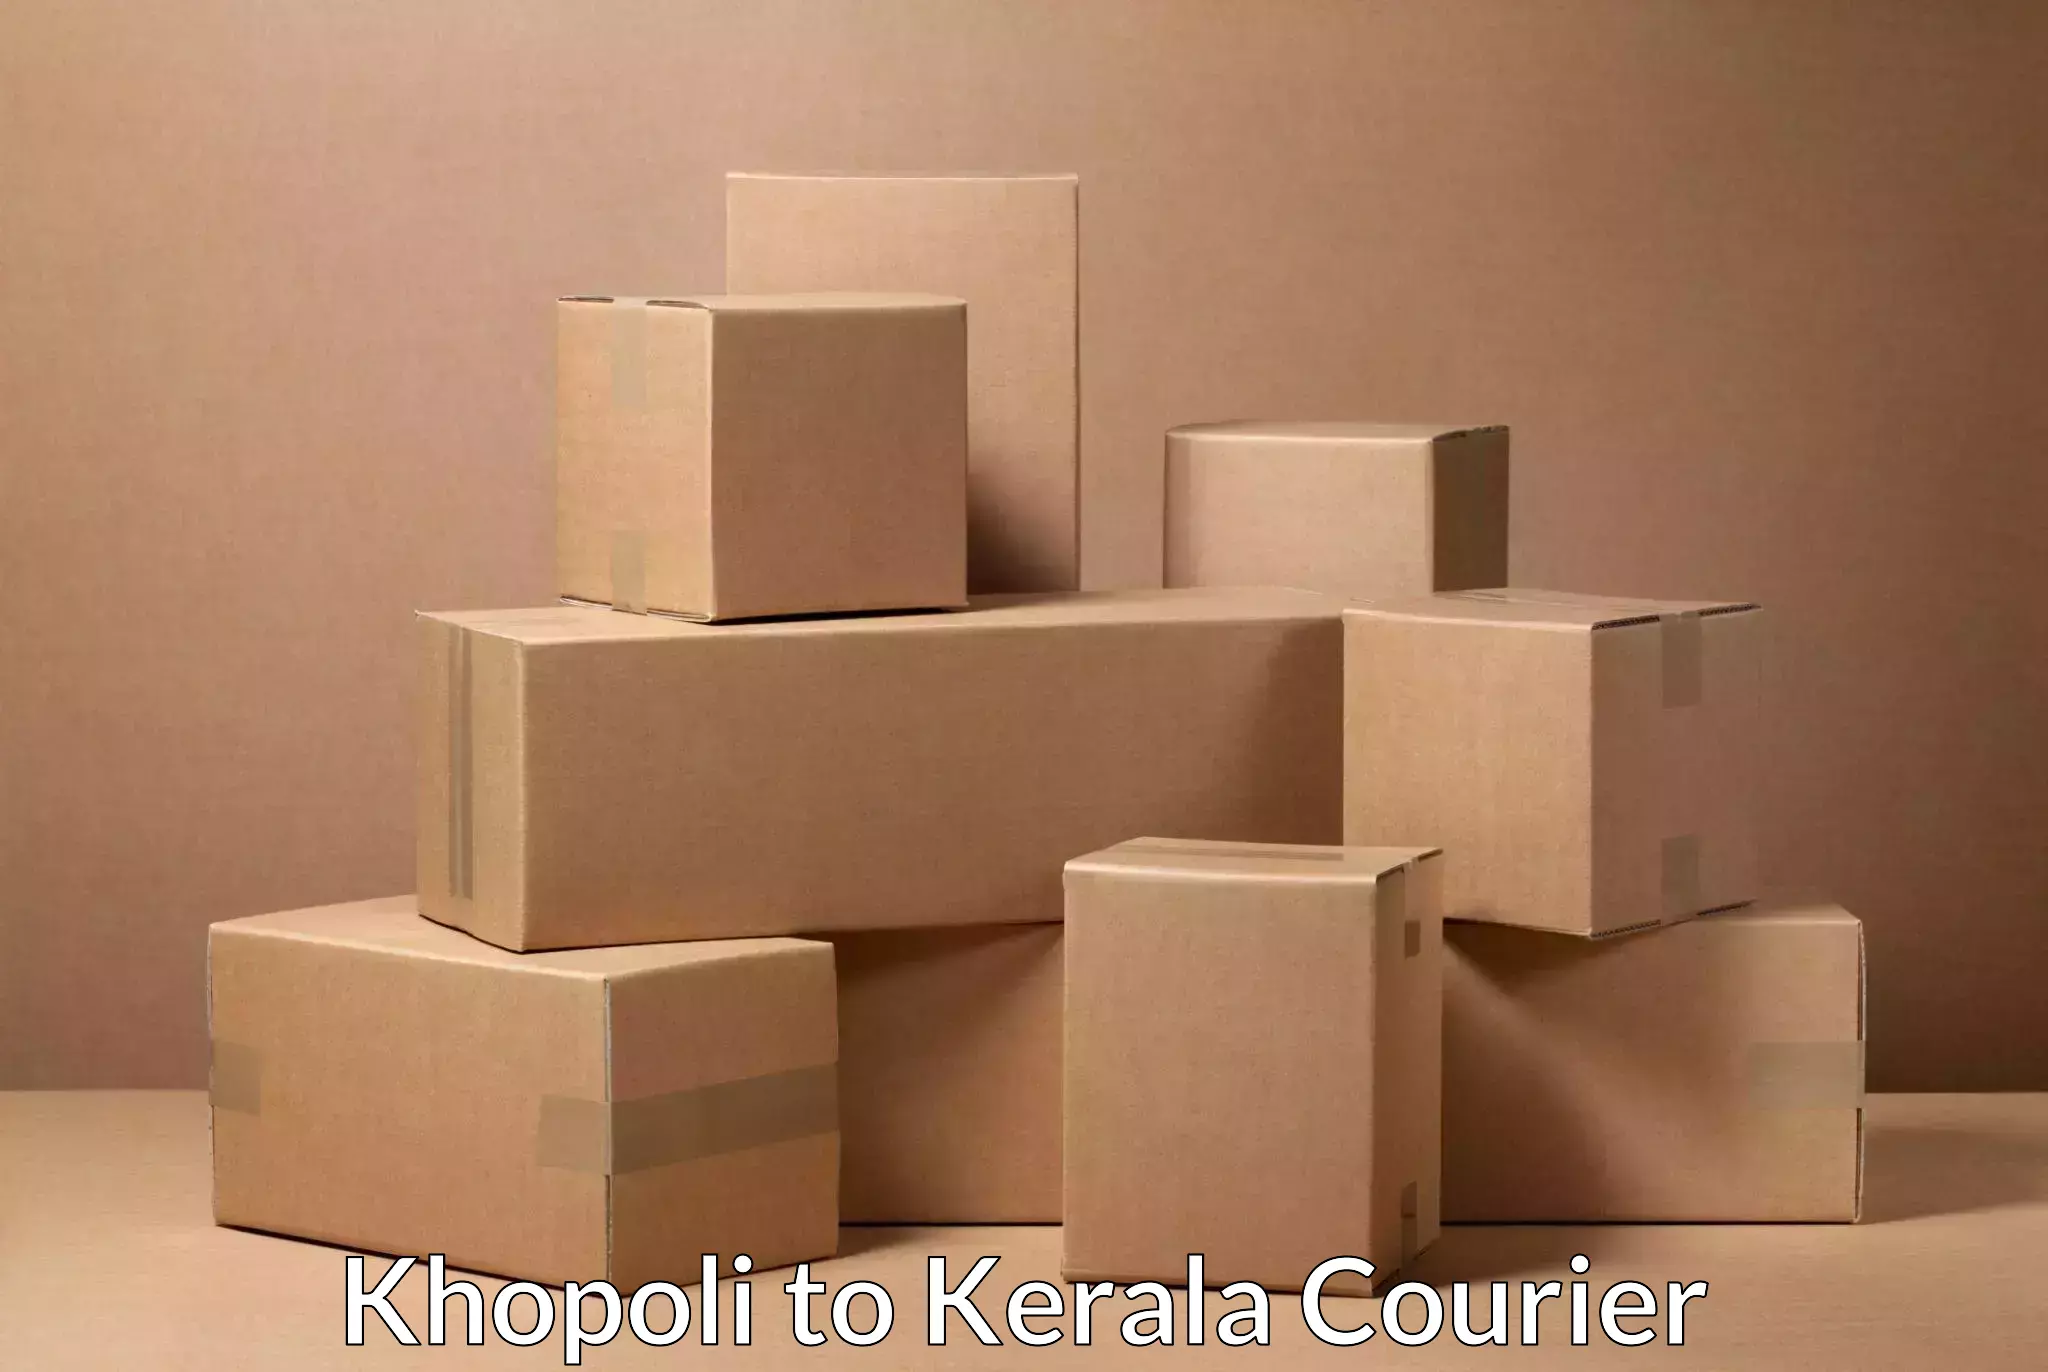 Courier service comparison Khopoli to Kerala